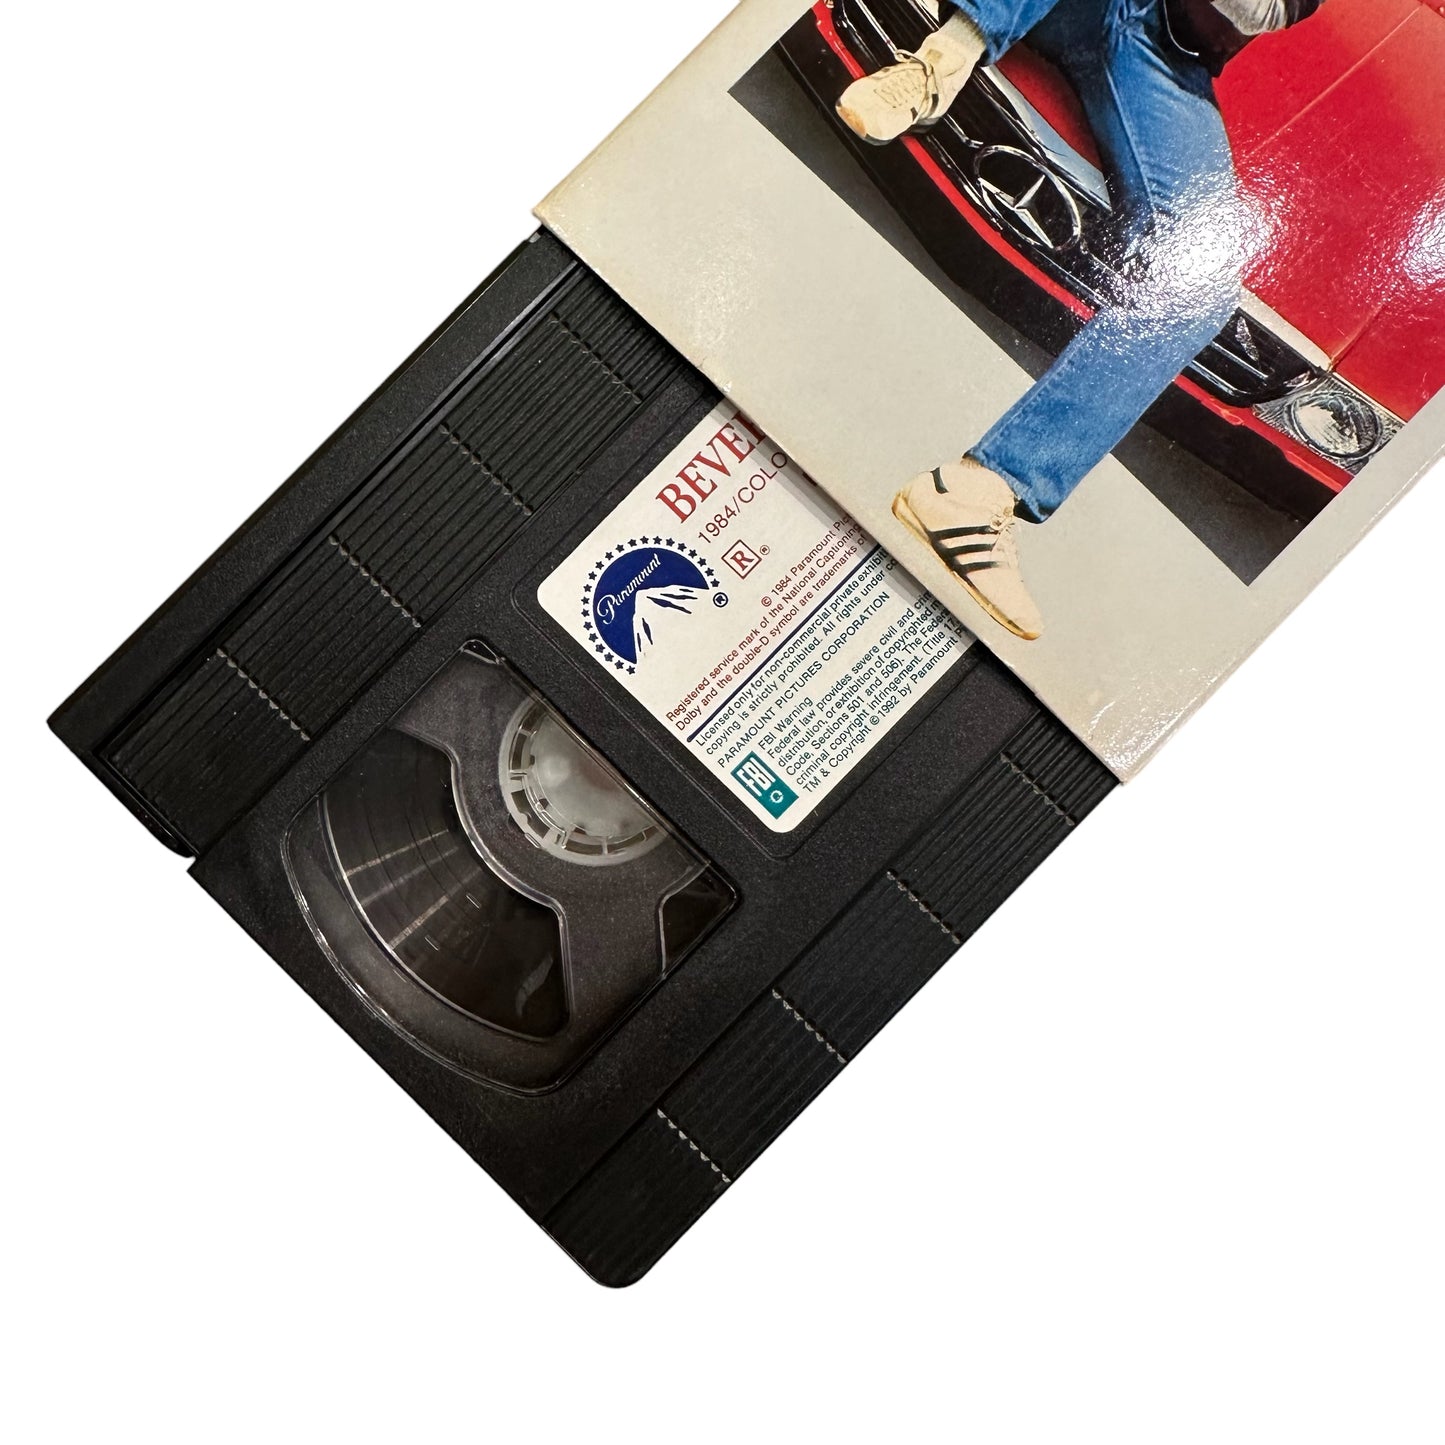 VHS ビデオテープ 輸入版 ビバリーヒルズ・コップ Beverly Hills Cop 海外版 USA アメリカ ヴィンテージ ビデオ 紙ジャケ